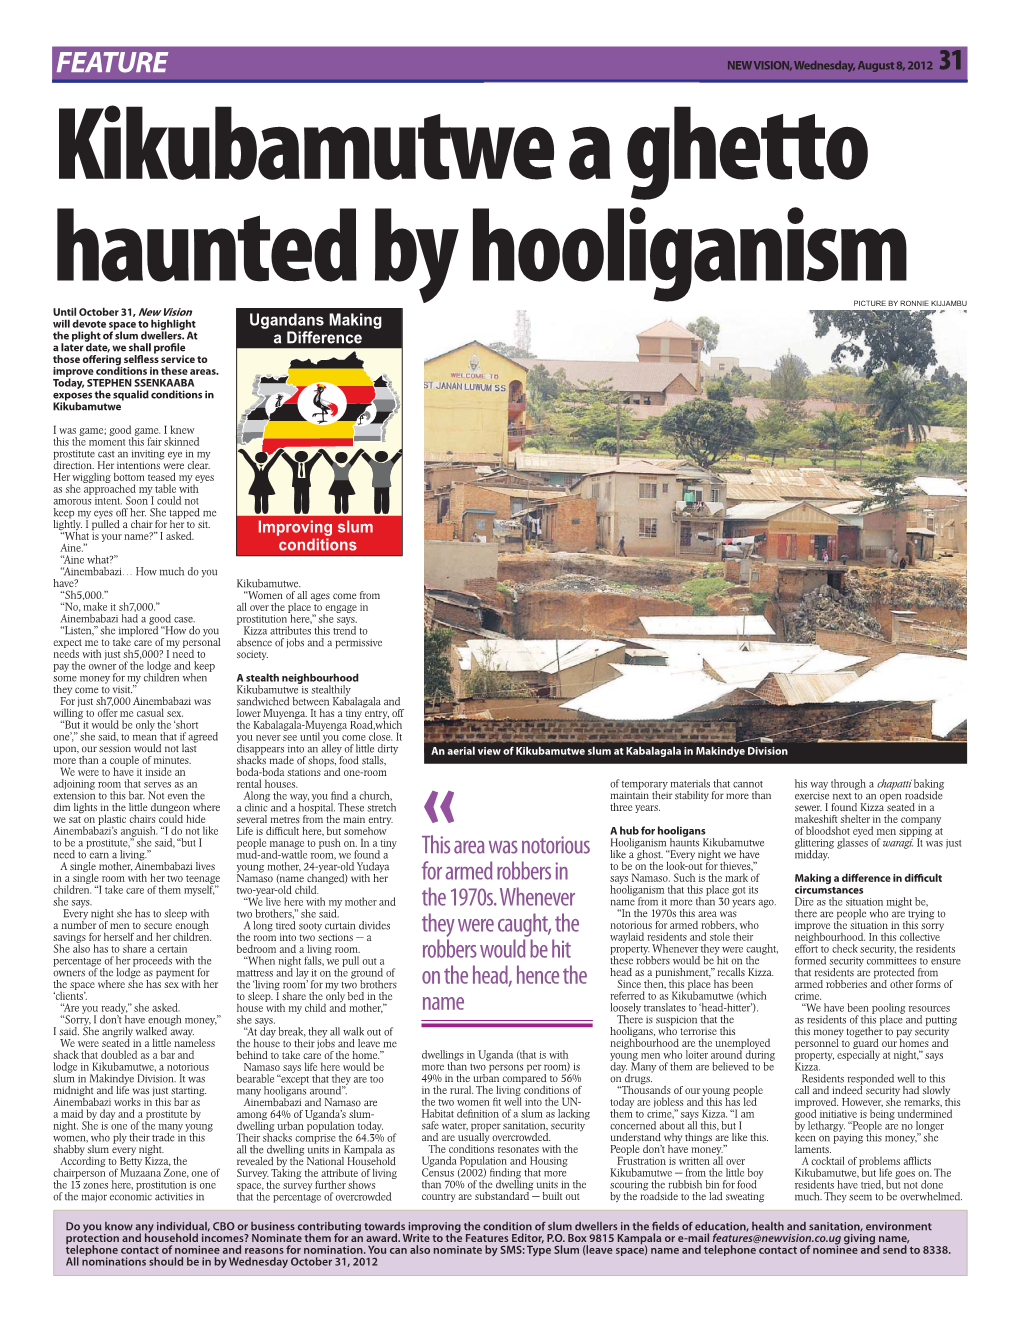 Kikubamutwe a Ghetto Haunted by Hooliganism